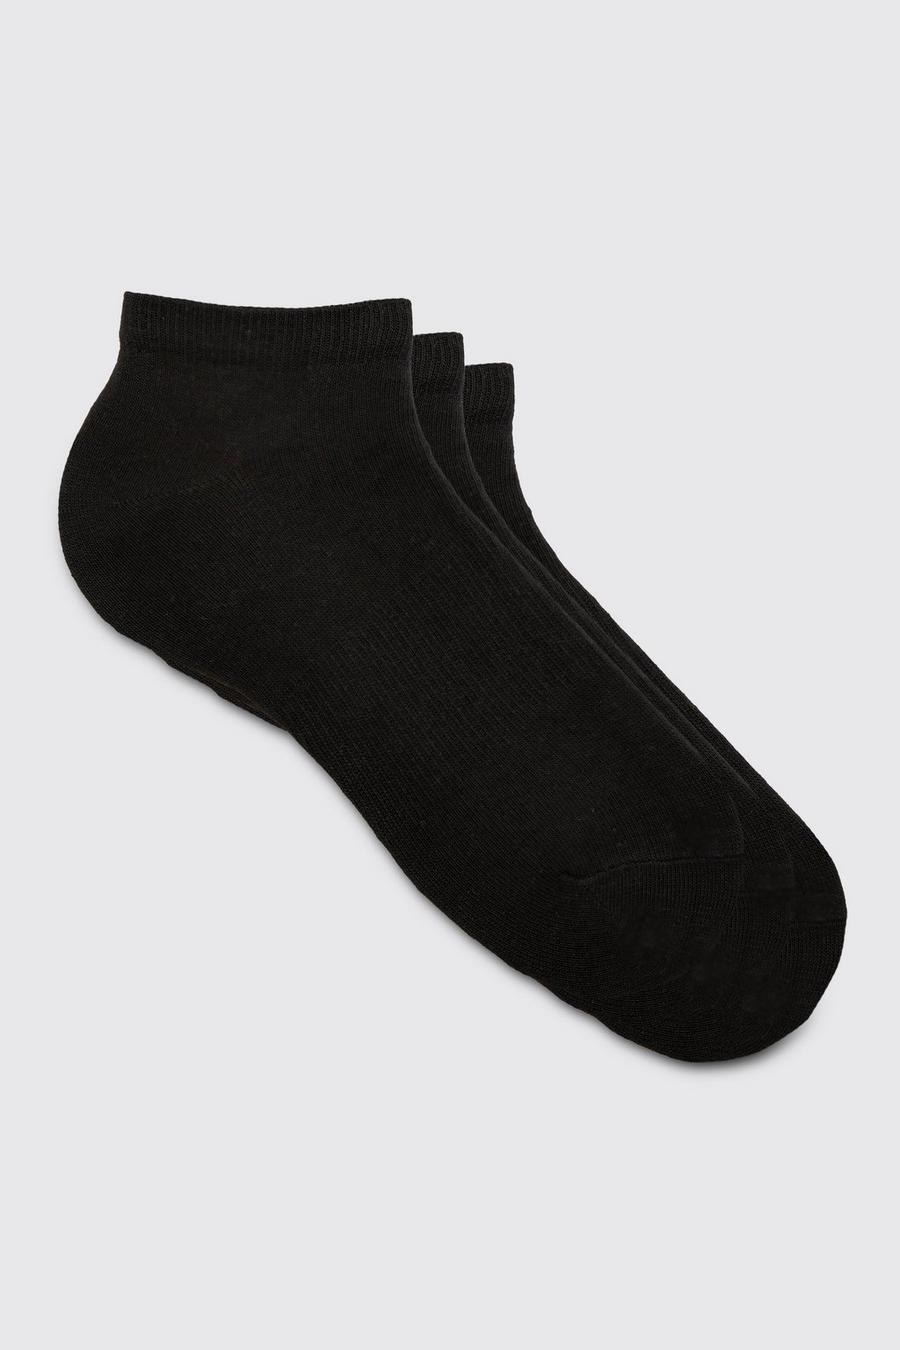 Pack de 3 pares de calcetines deportivos lisos, Black negro